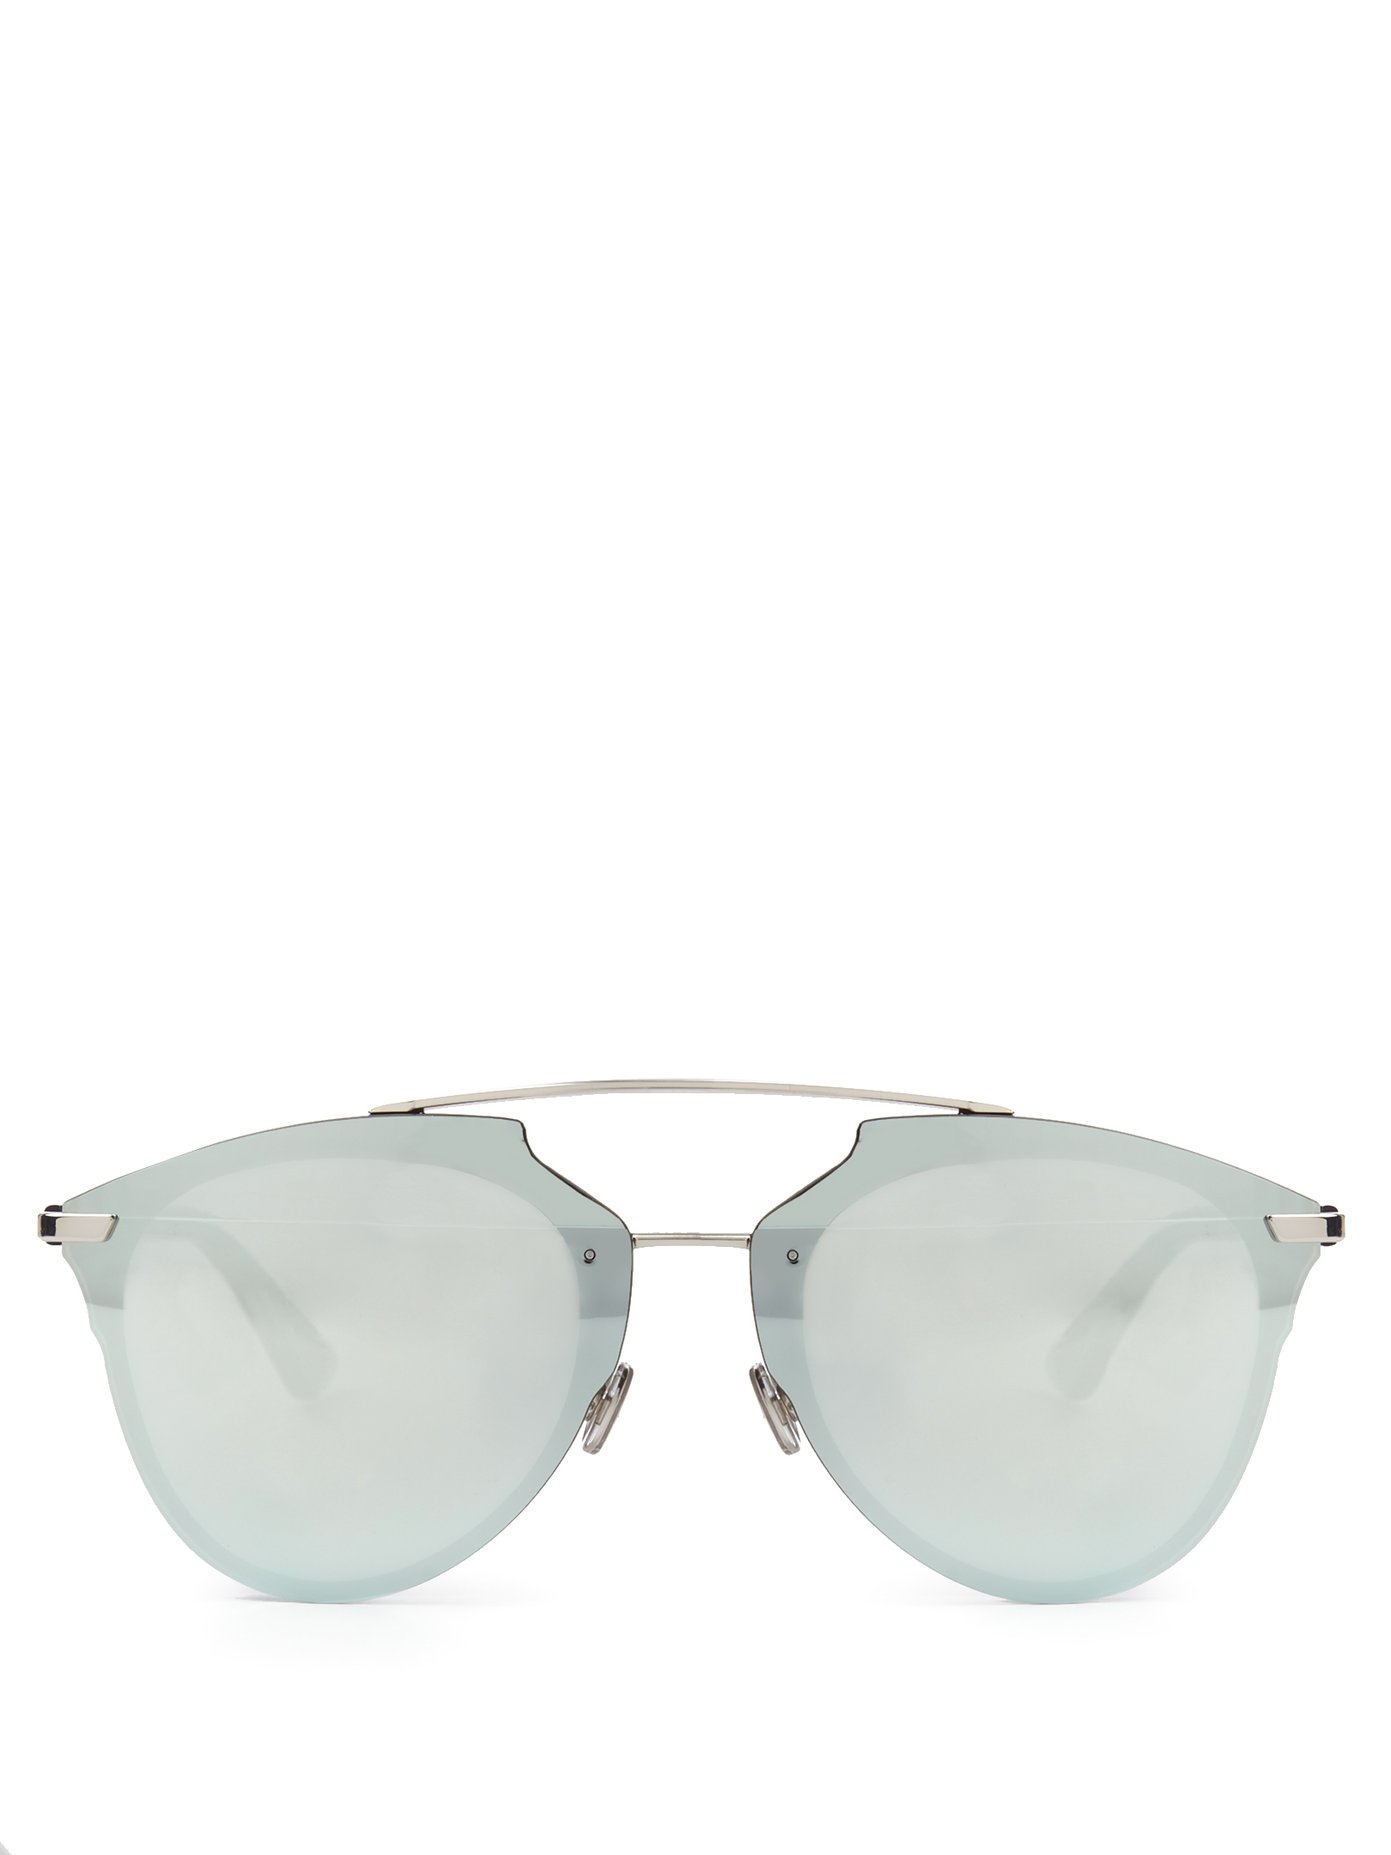 Reflected sunglasses | DIOR 